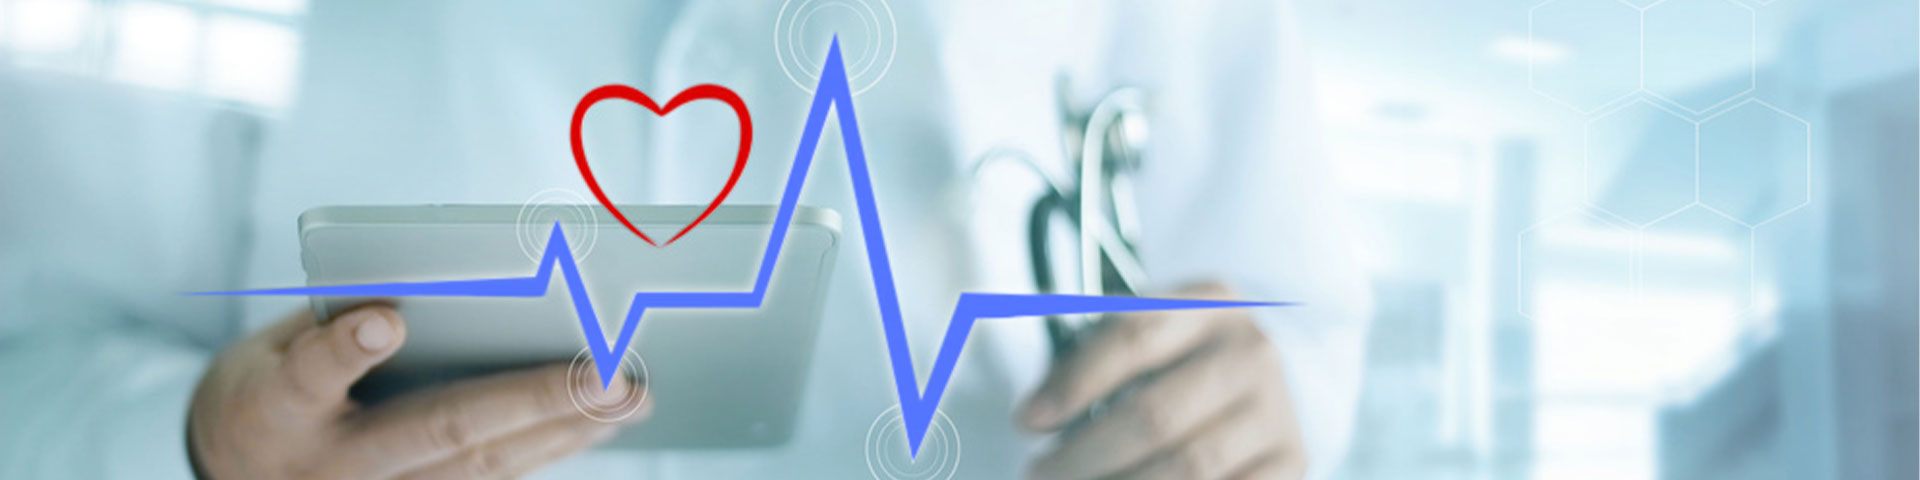 Arzt hält Tablet, Herzgrafik auf dem Bild